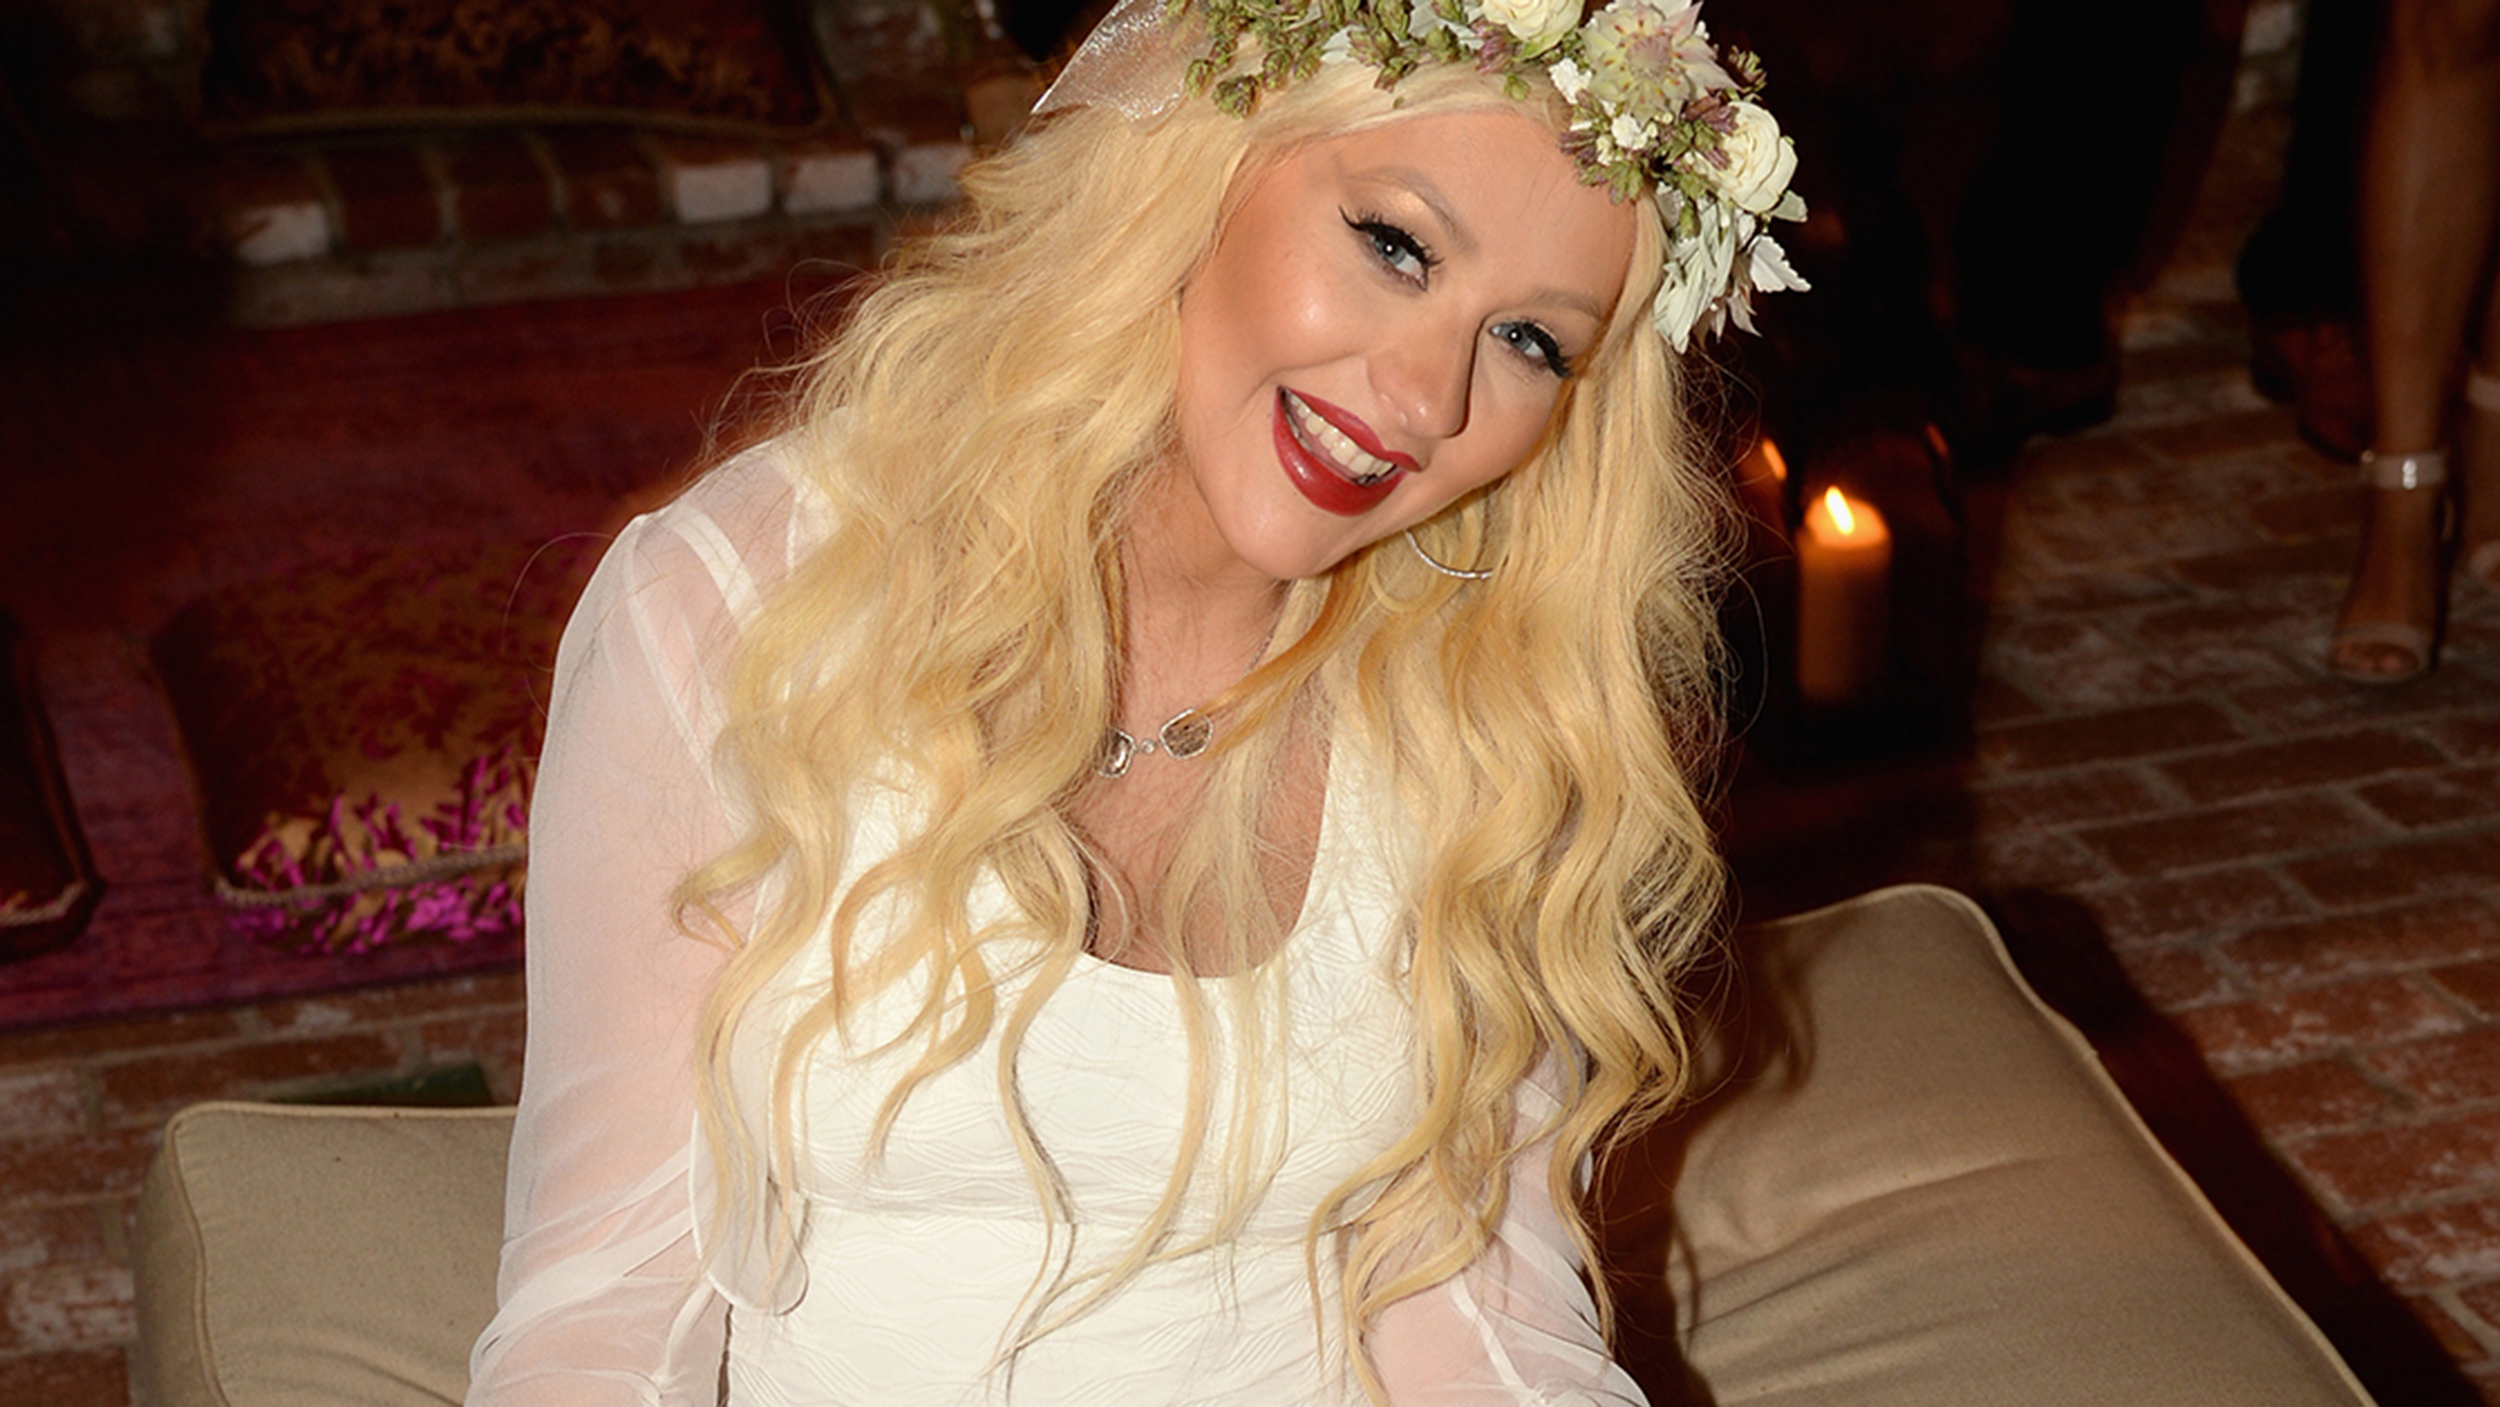 Christina Aguilera baby shower: See the raunchy cake - TODAY.com